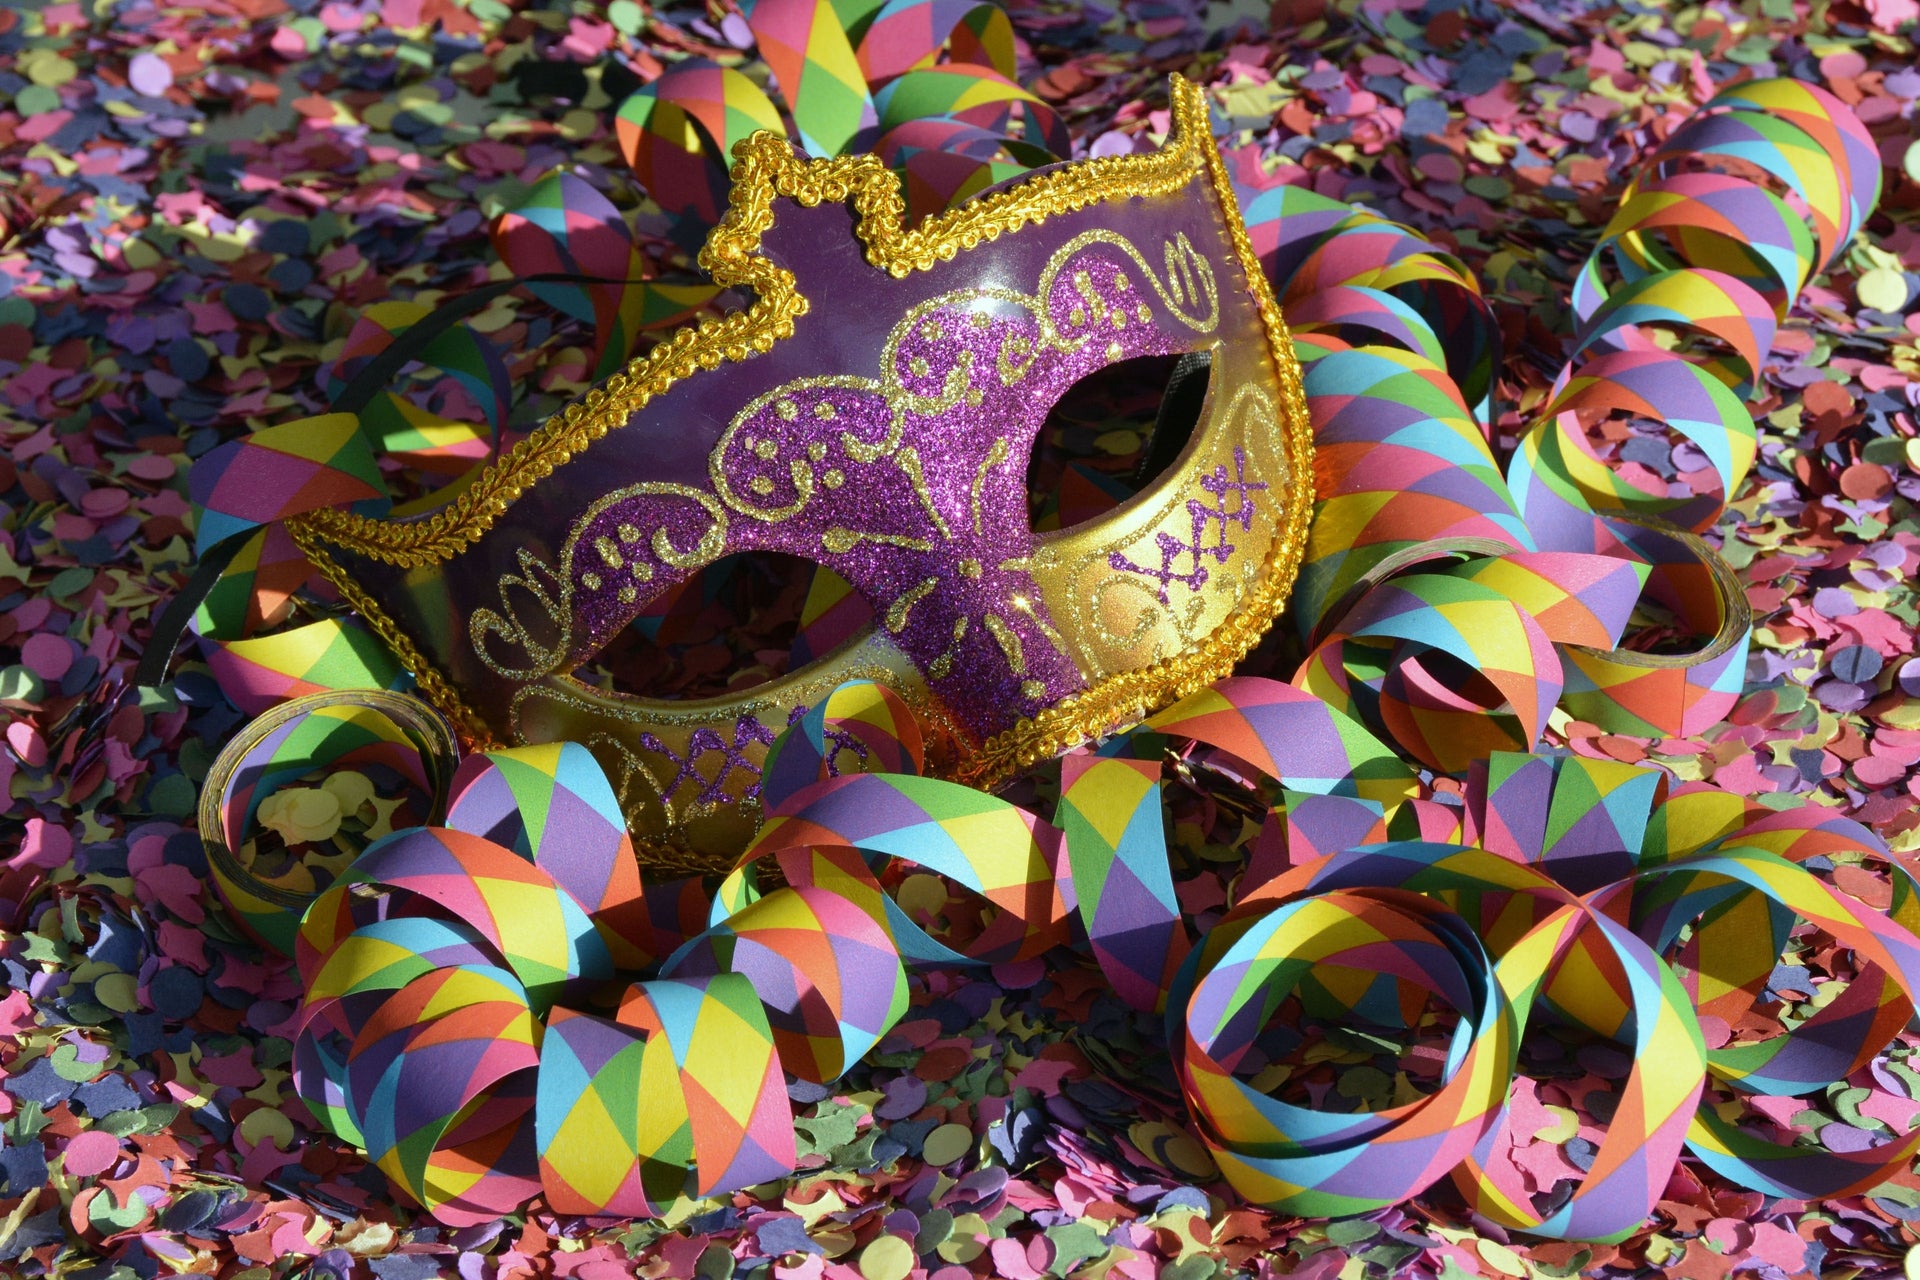 Environmentally conscious approach to Mardi Gras celebrations